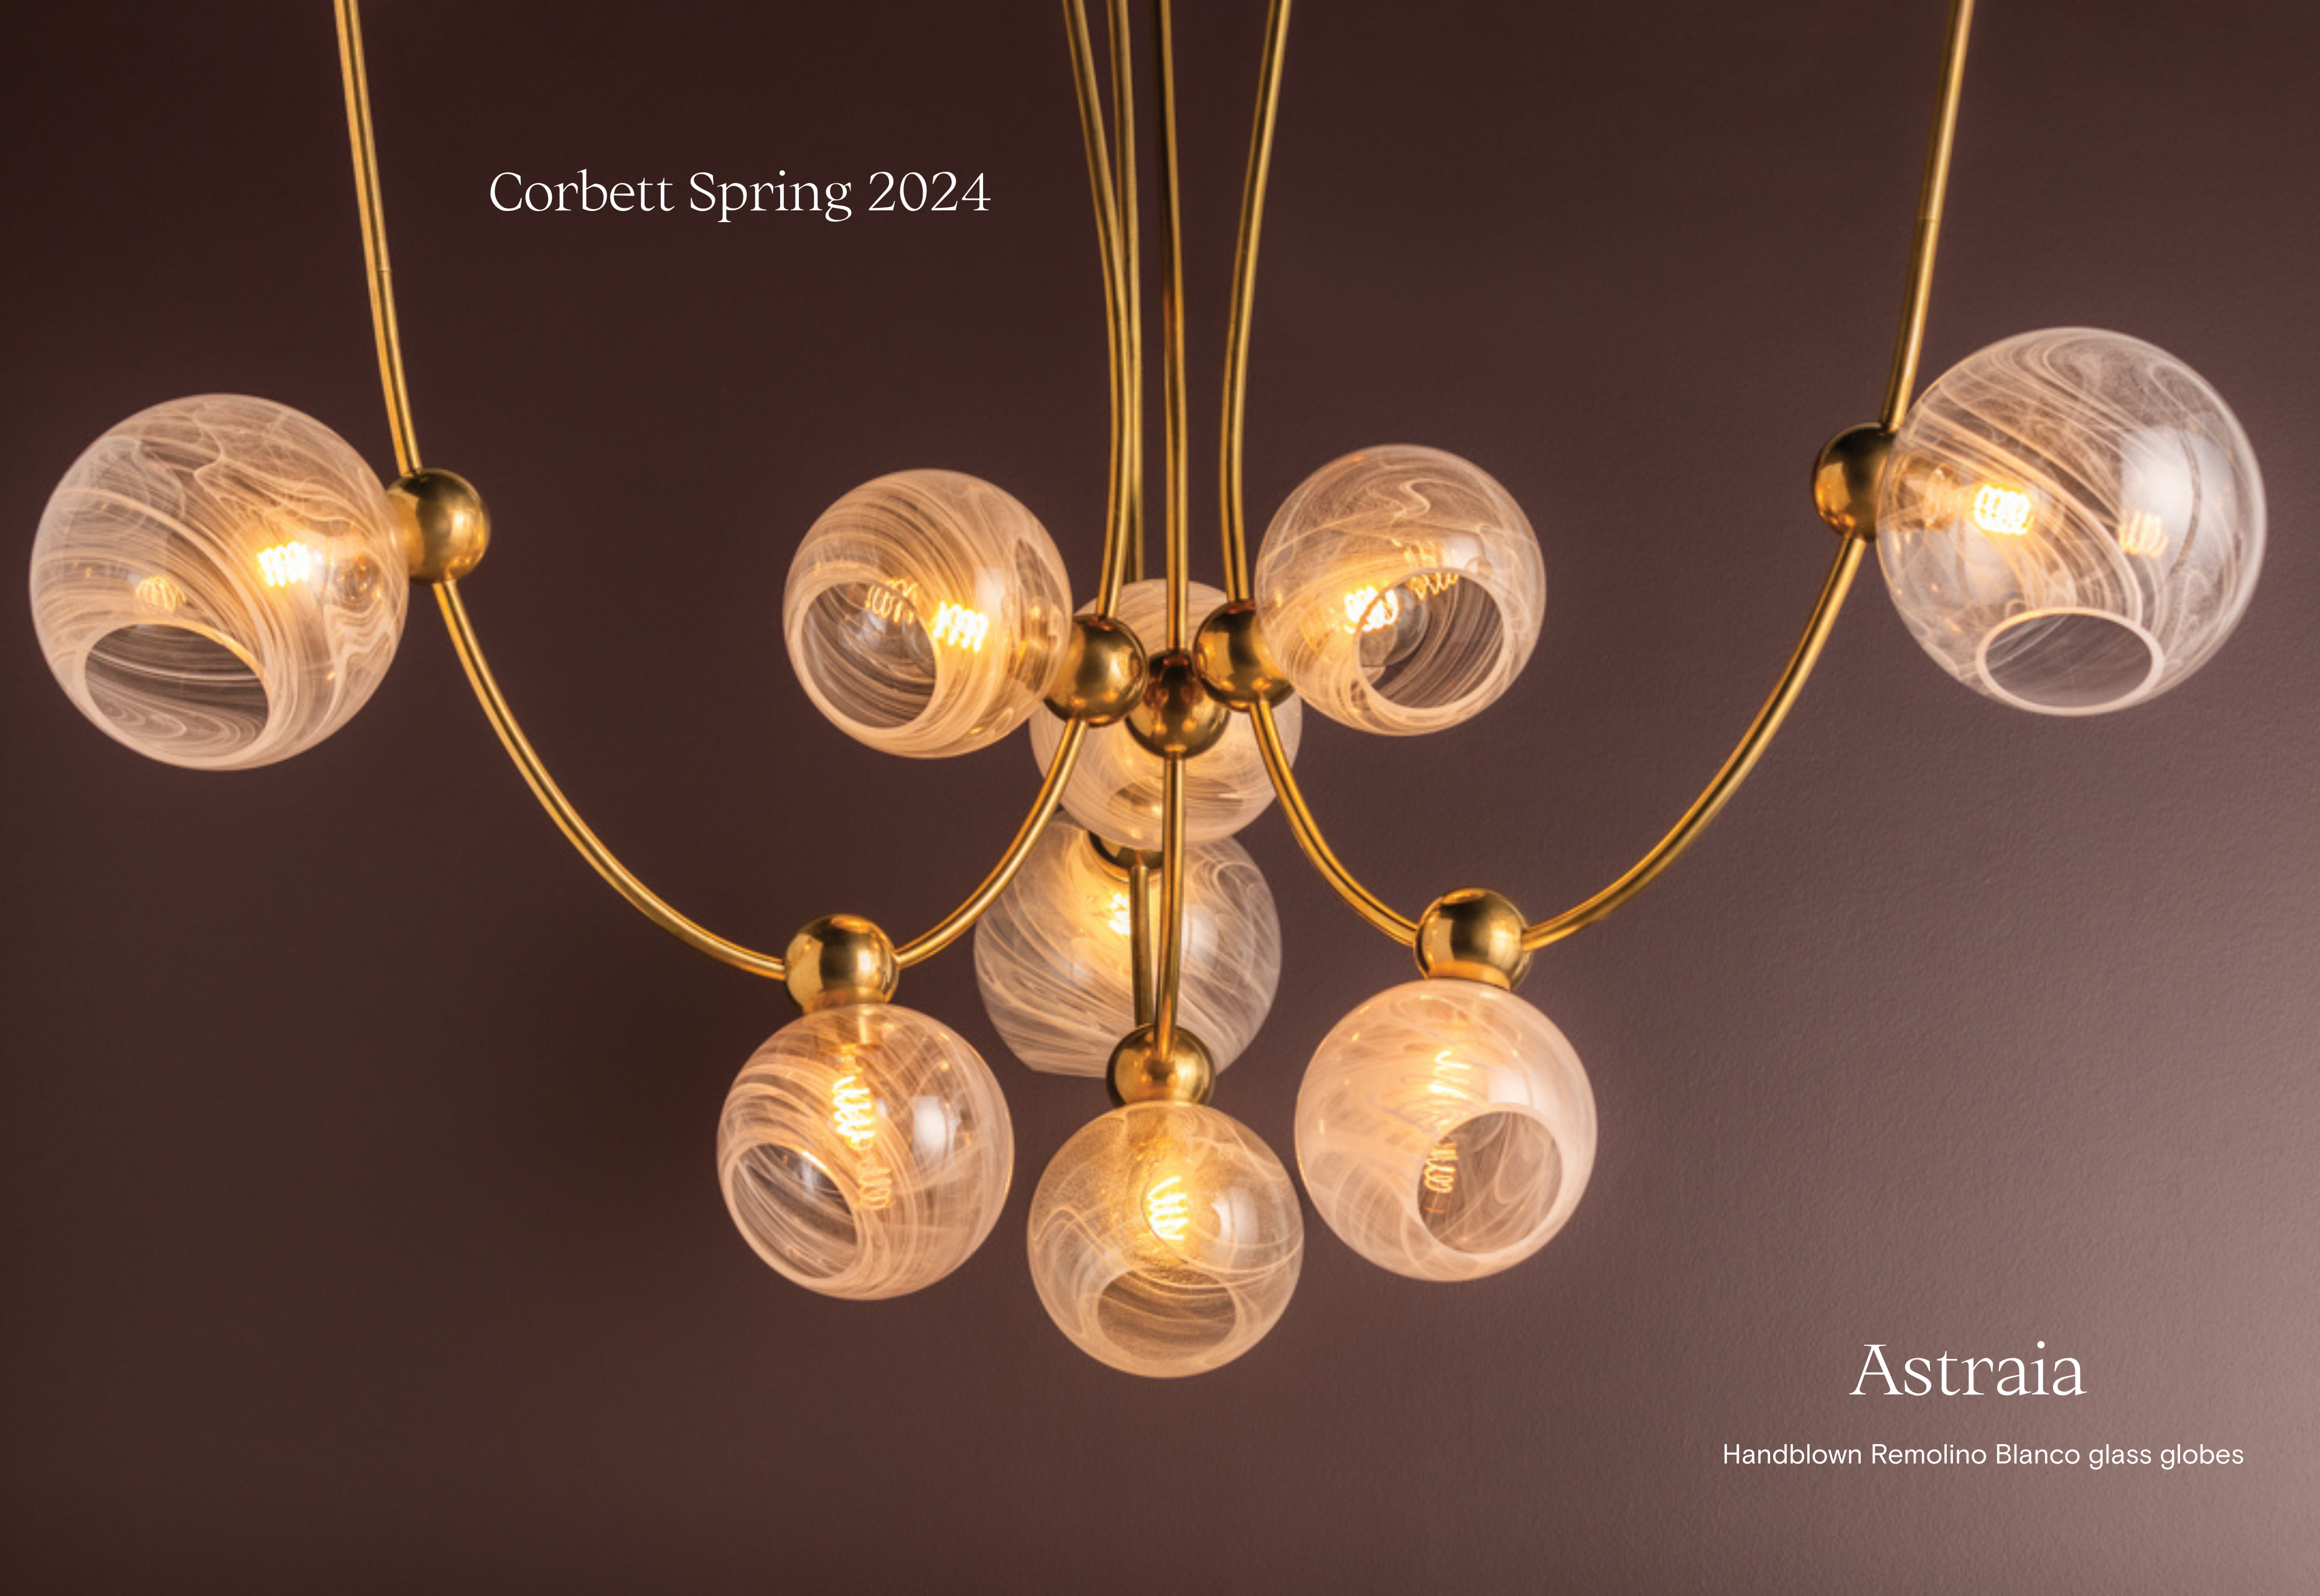 Large astraia chandelier by Corbett Lighting featuring round alabaster globes